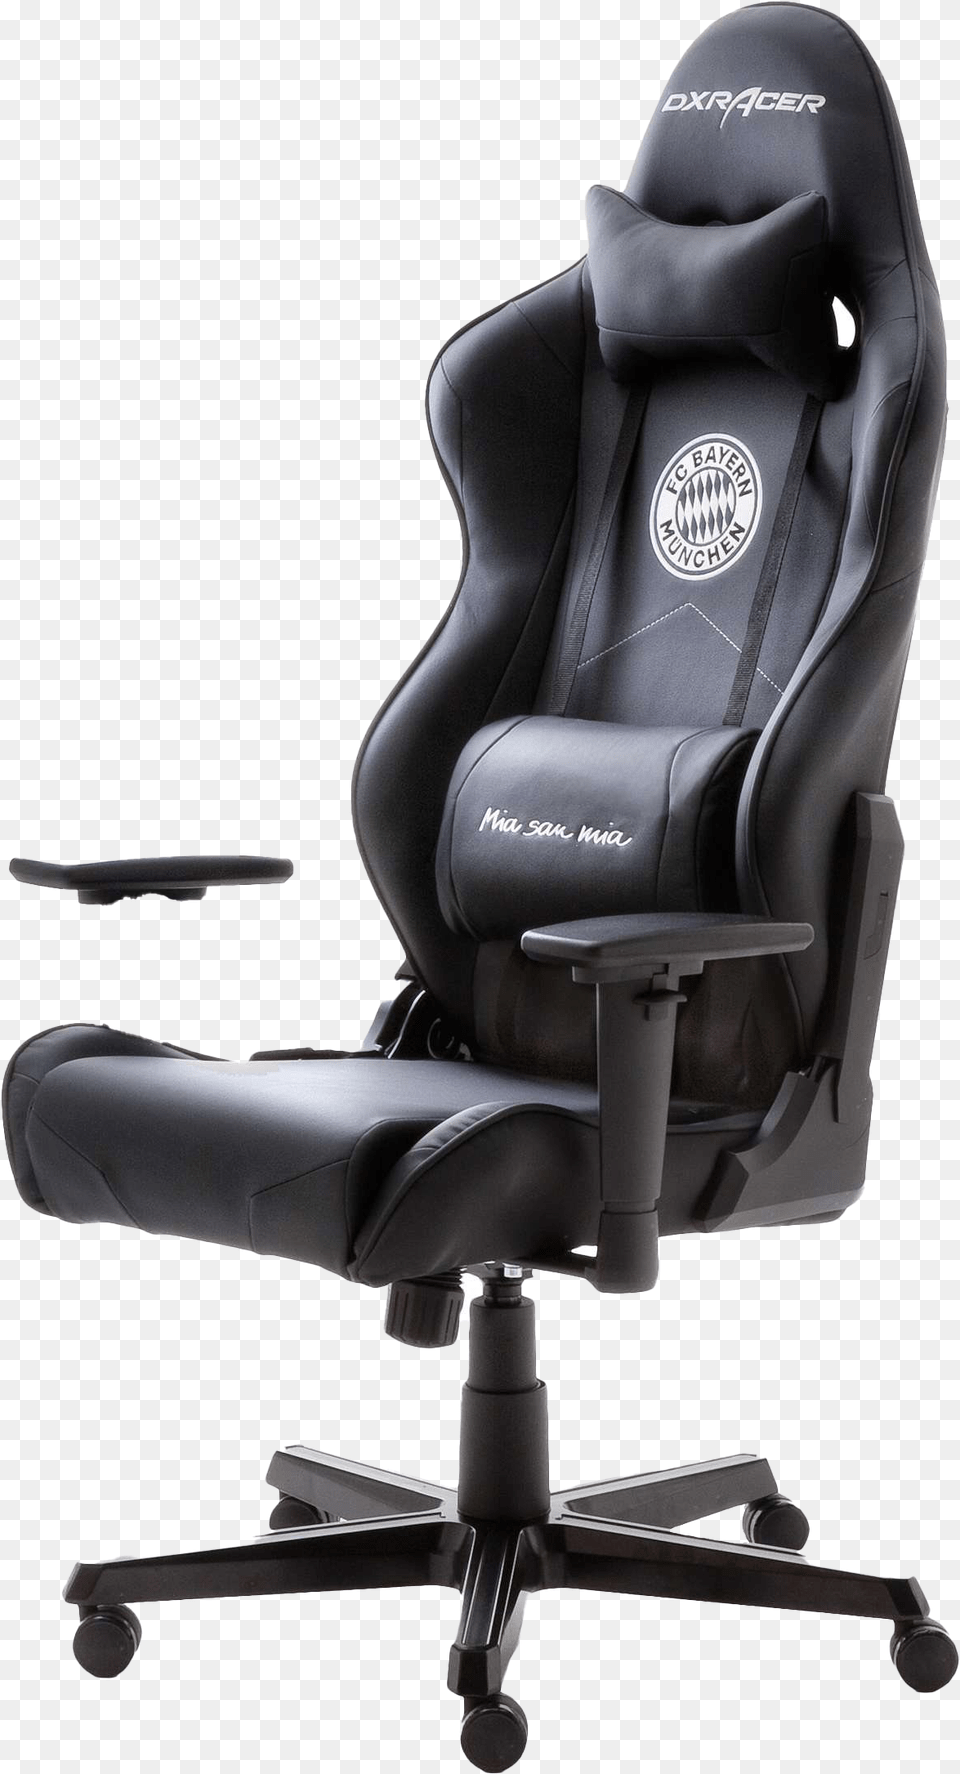 Dxracer Chair High Quality Image Dxracer Tank Red, Cushion, Furniture, Home Decor, Headrest Png